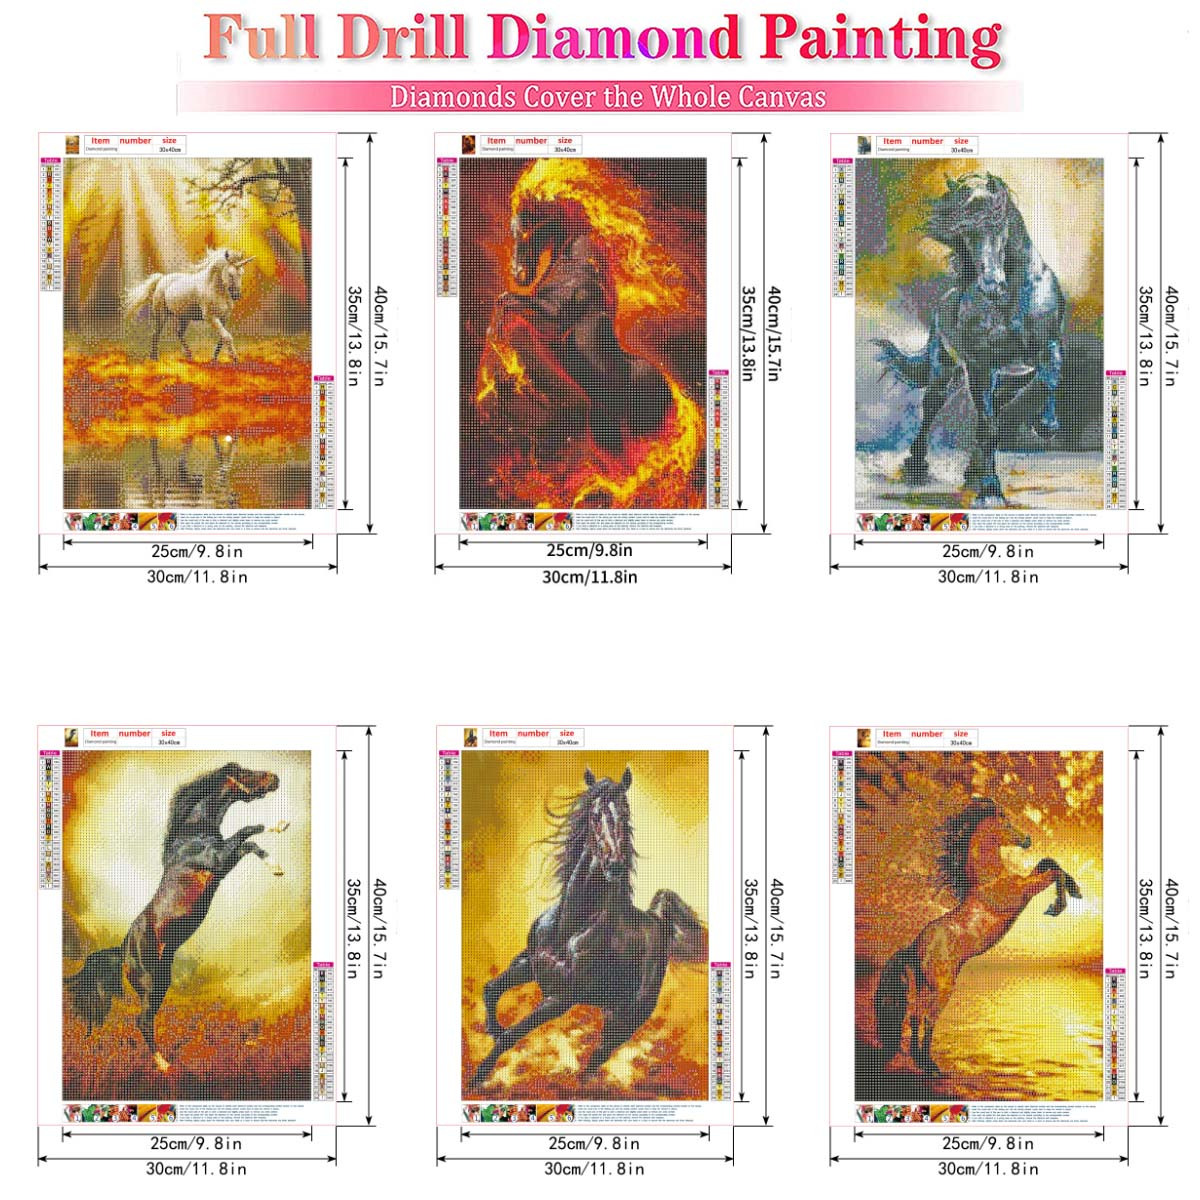 Pair of Horses Diamond Painting Kit, code AM0039 RIOLIS